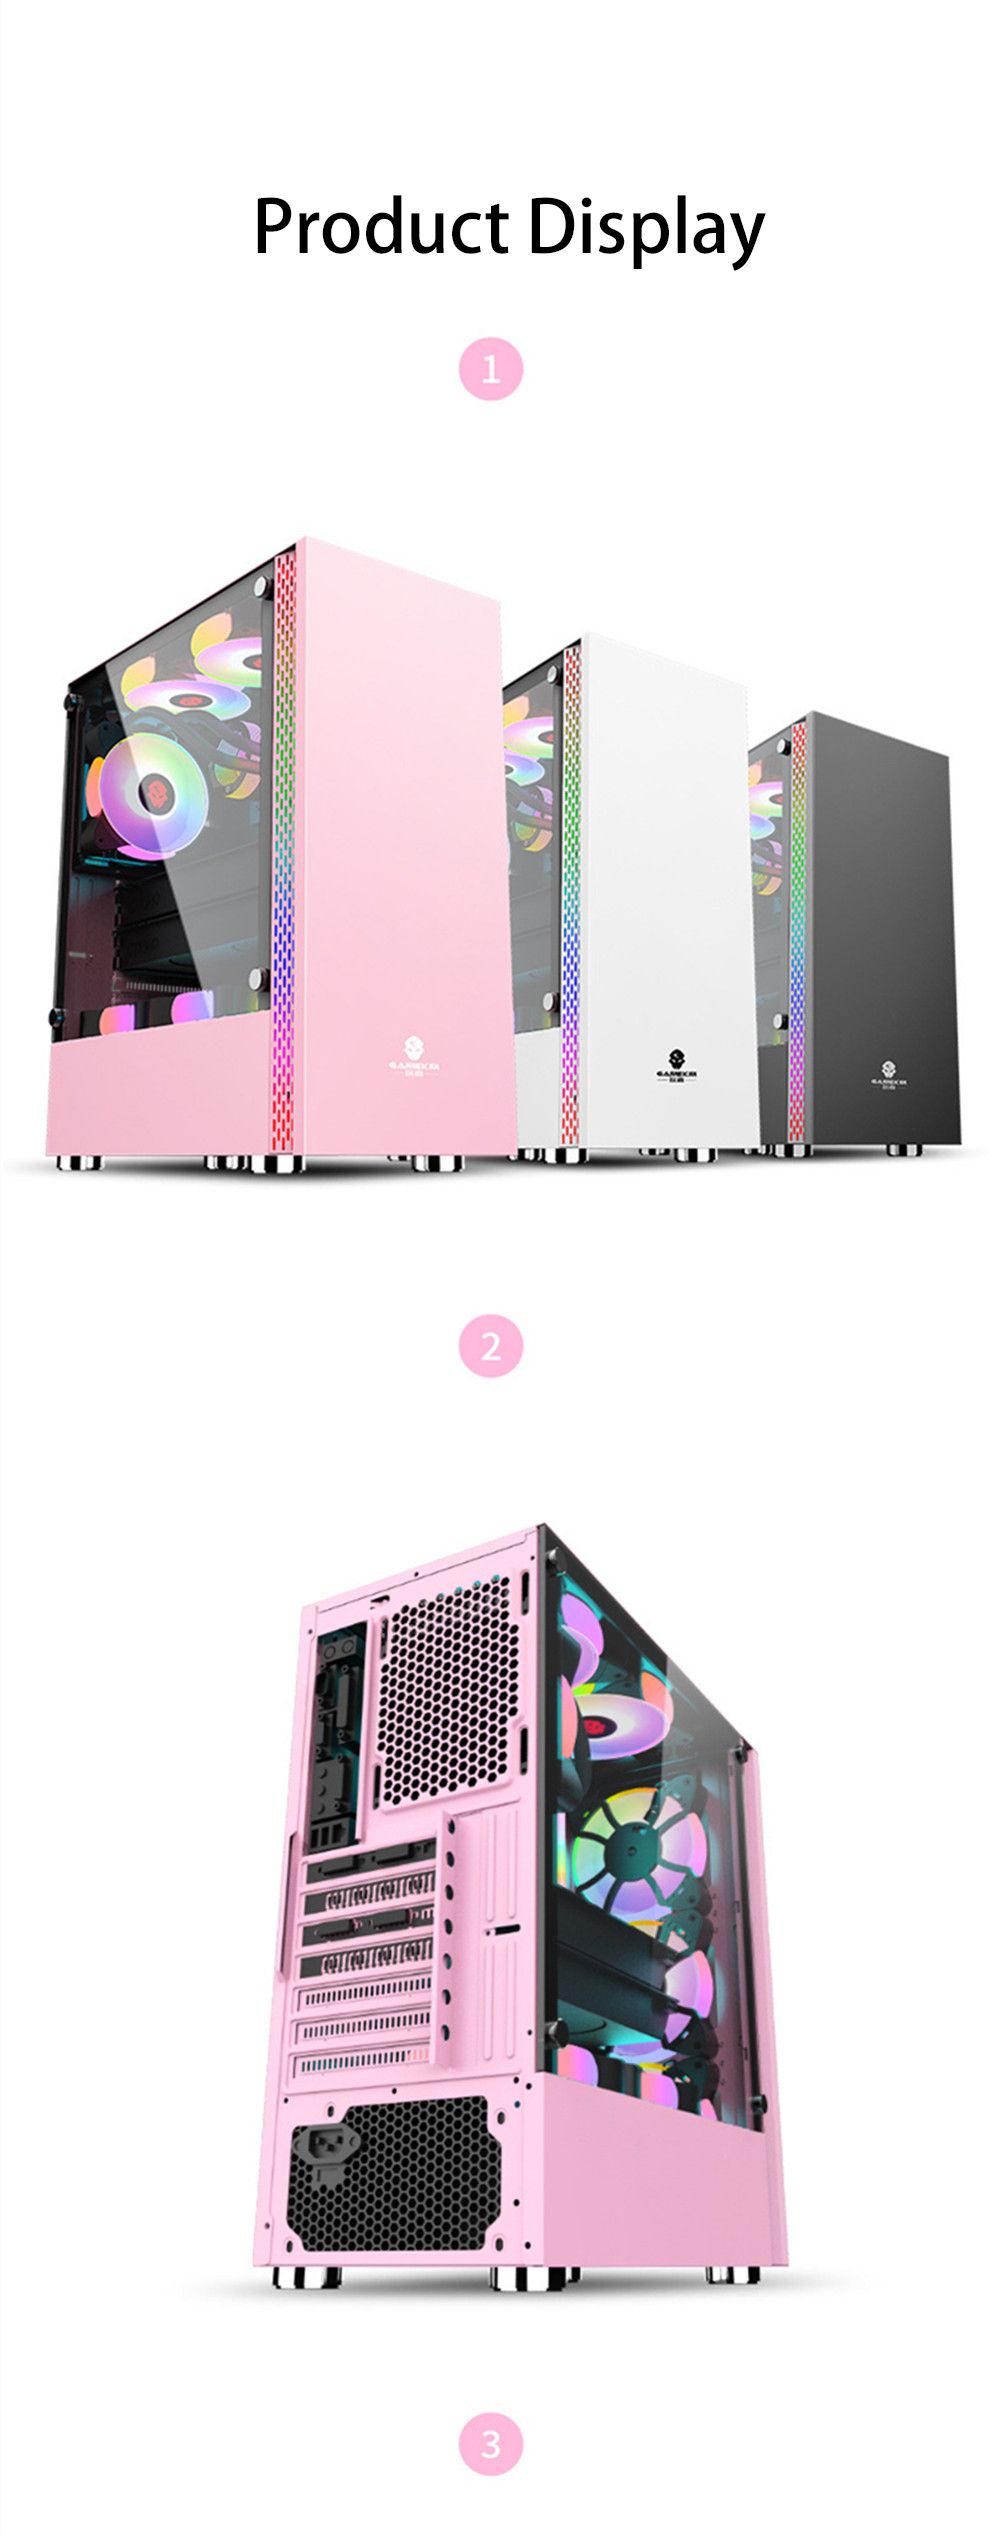 Quadratic-Element-Desktop-Computer-Case-USB30-Interface-Tempered-Glass-Gaming-PC-Case-Compatible-wit-1721611